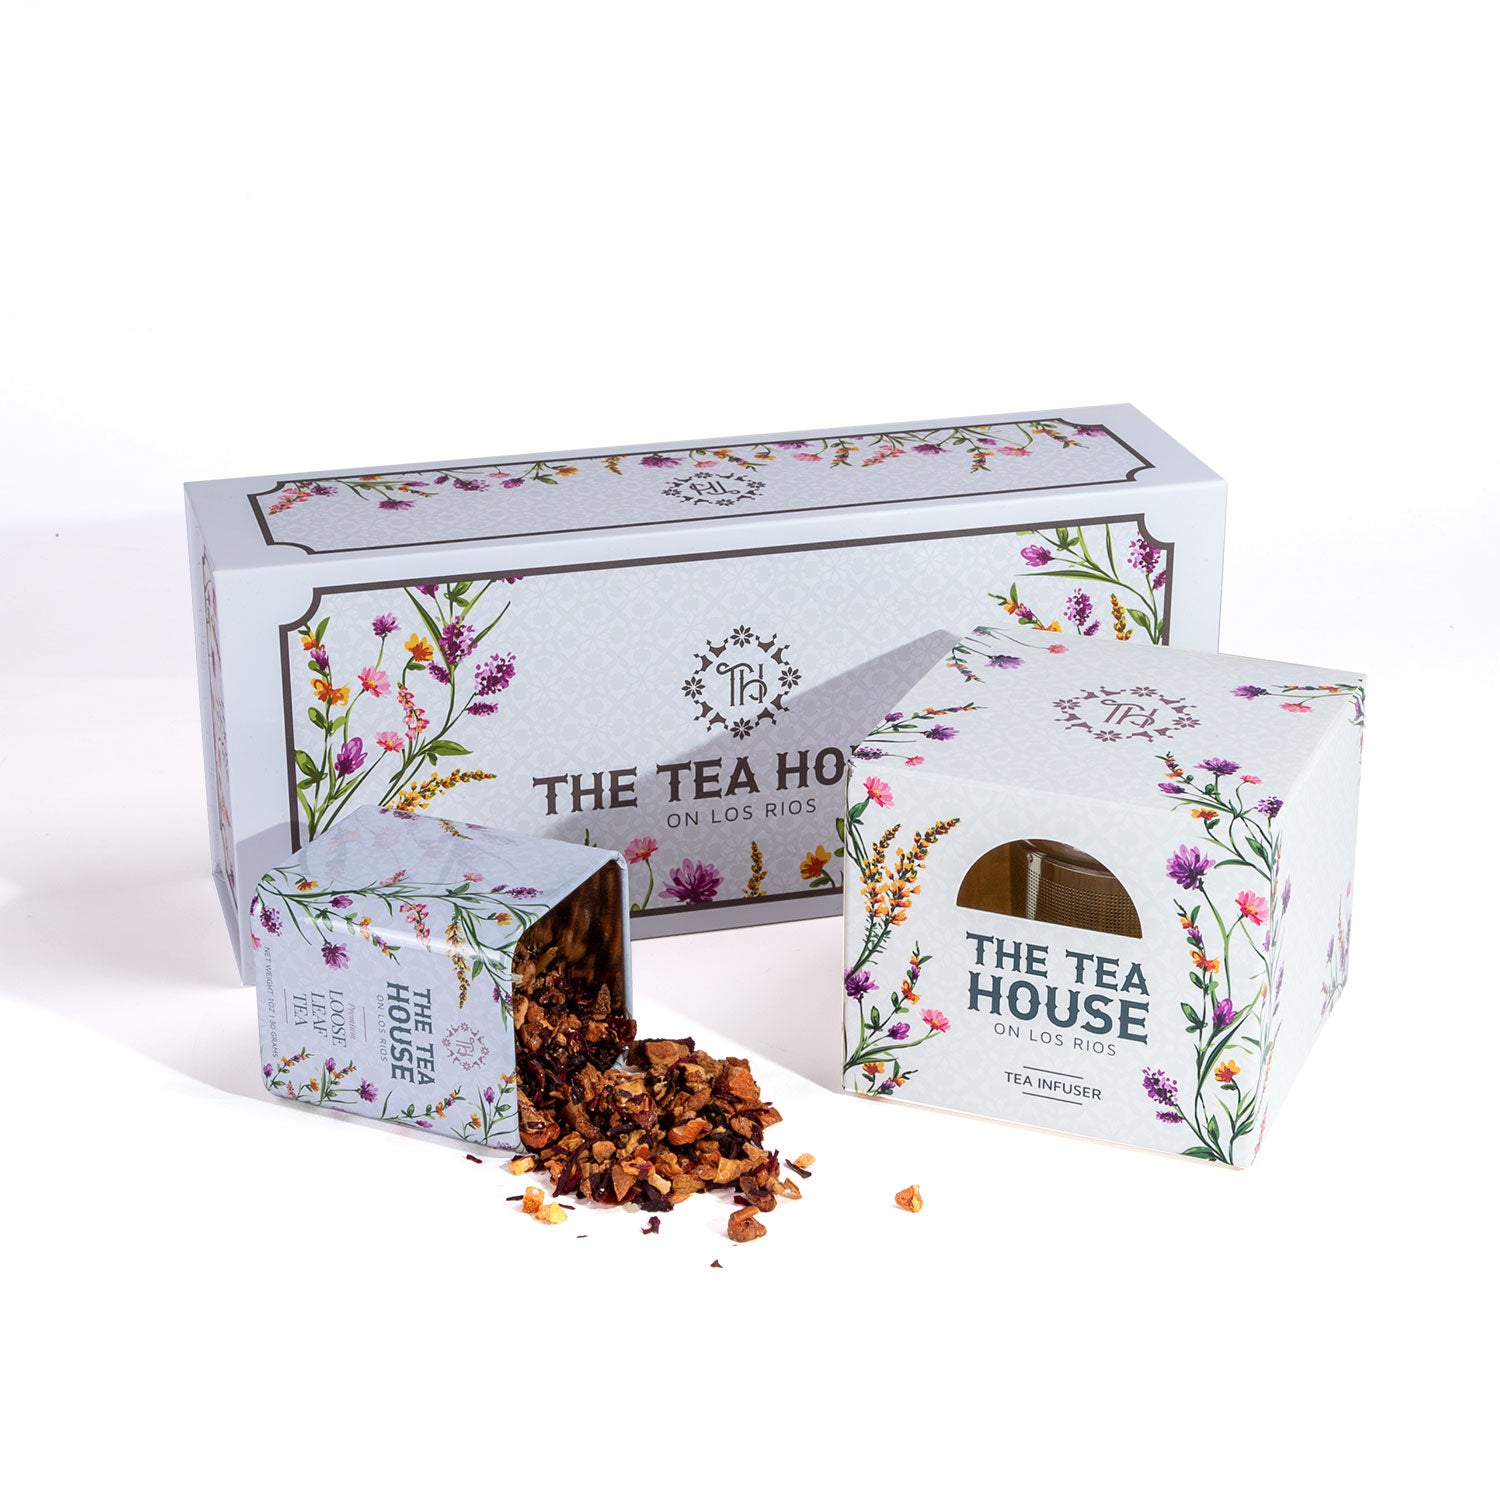 The Tea House on Los Rios - Gift Box, Tea Infuser and 30g Tea Tin 